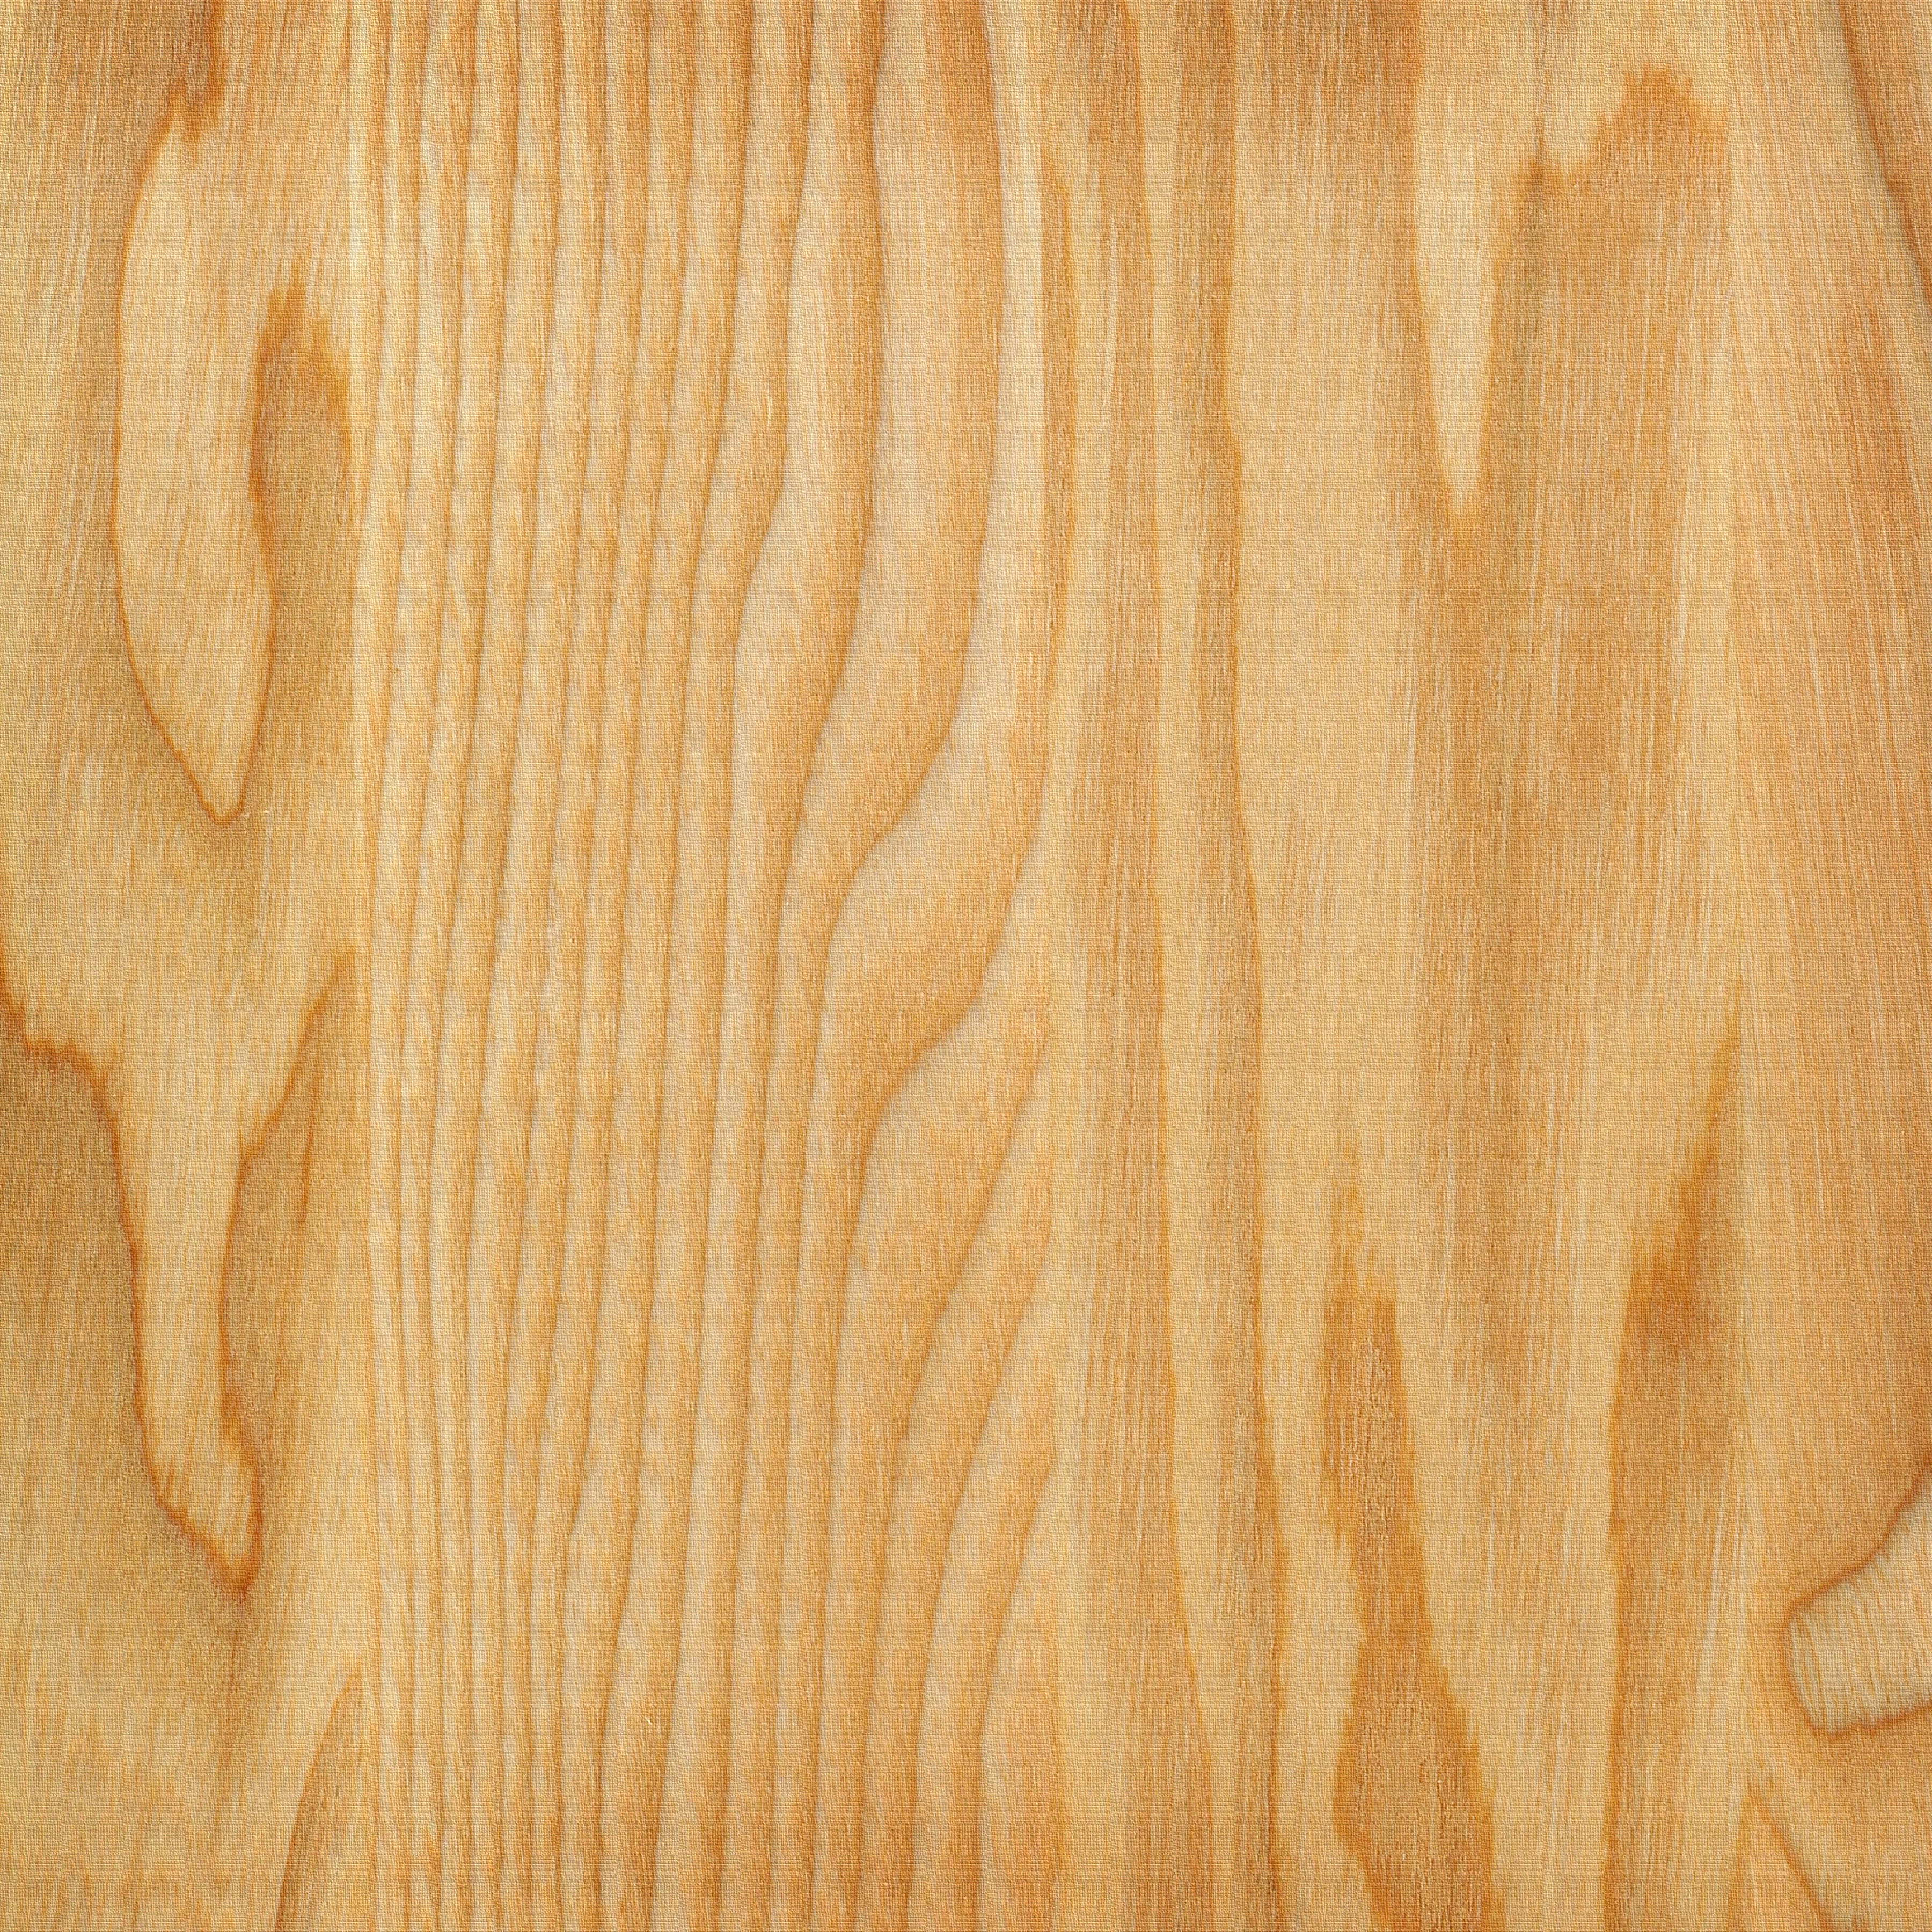 Texture Wood Background Tree Photo